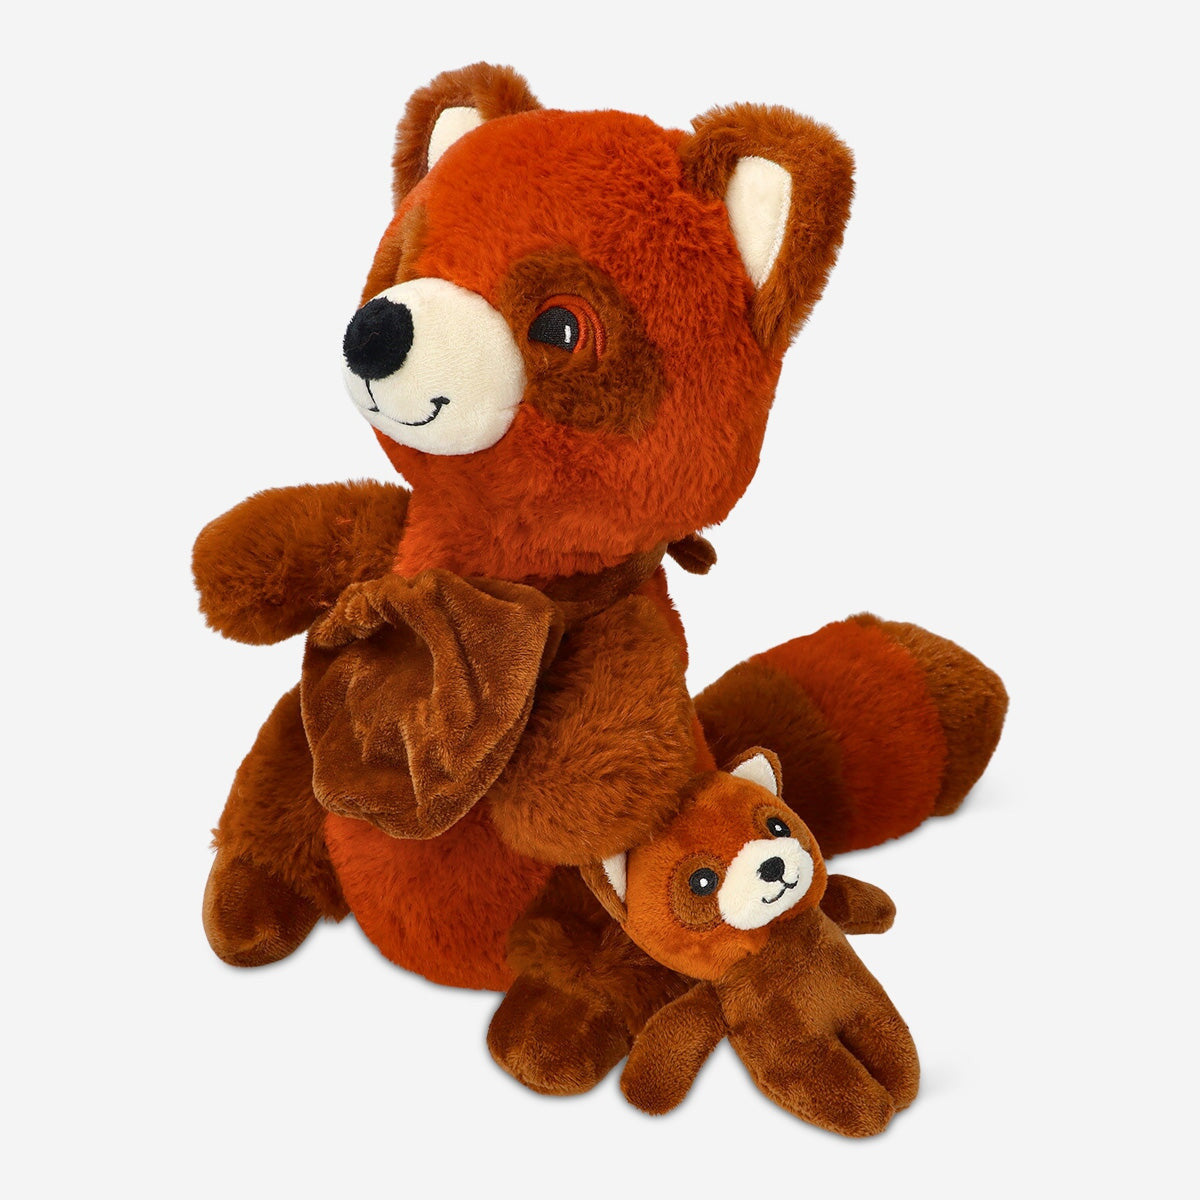 Comprar cesta infantil para juguetes con diseño de panda AQUÍ